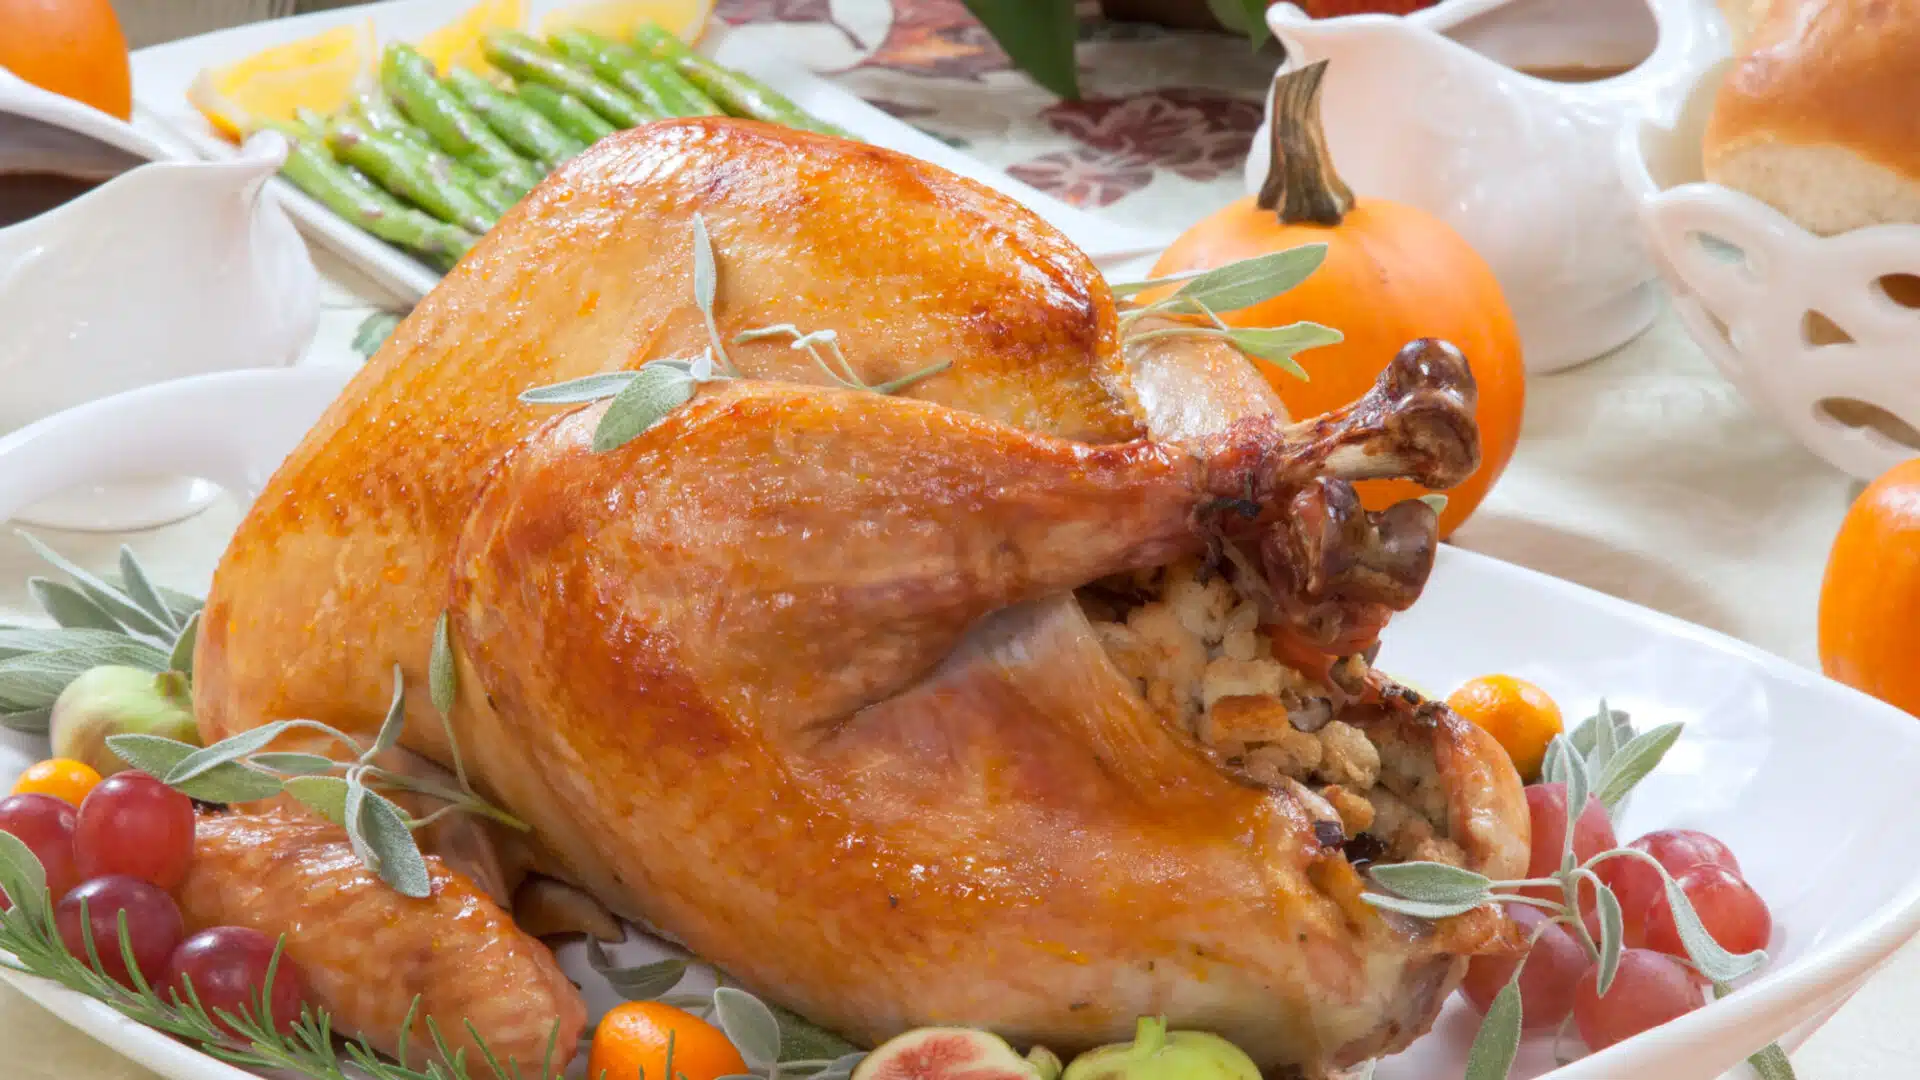 Roasted turkey on platter at Thanksgiving table